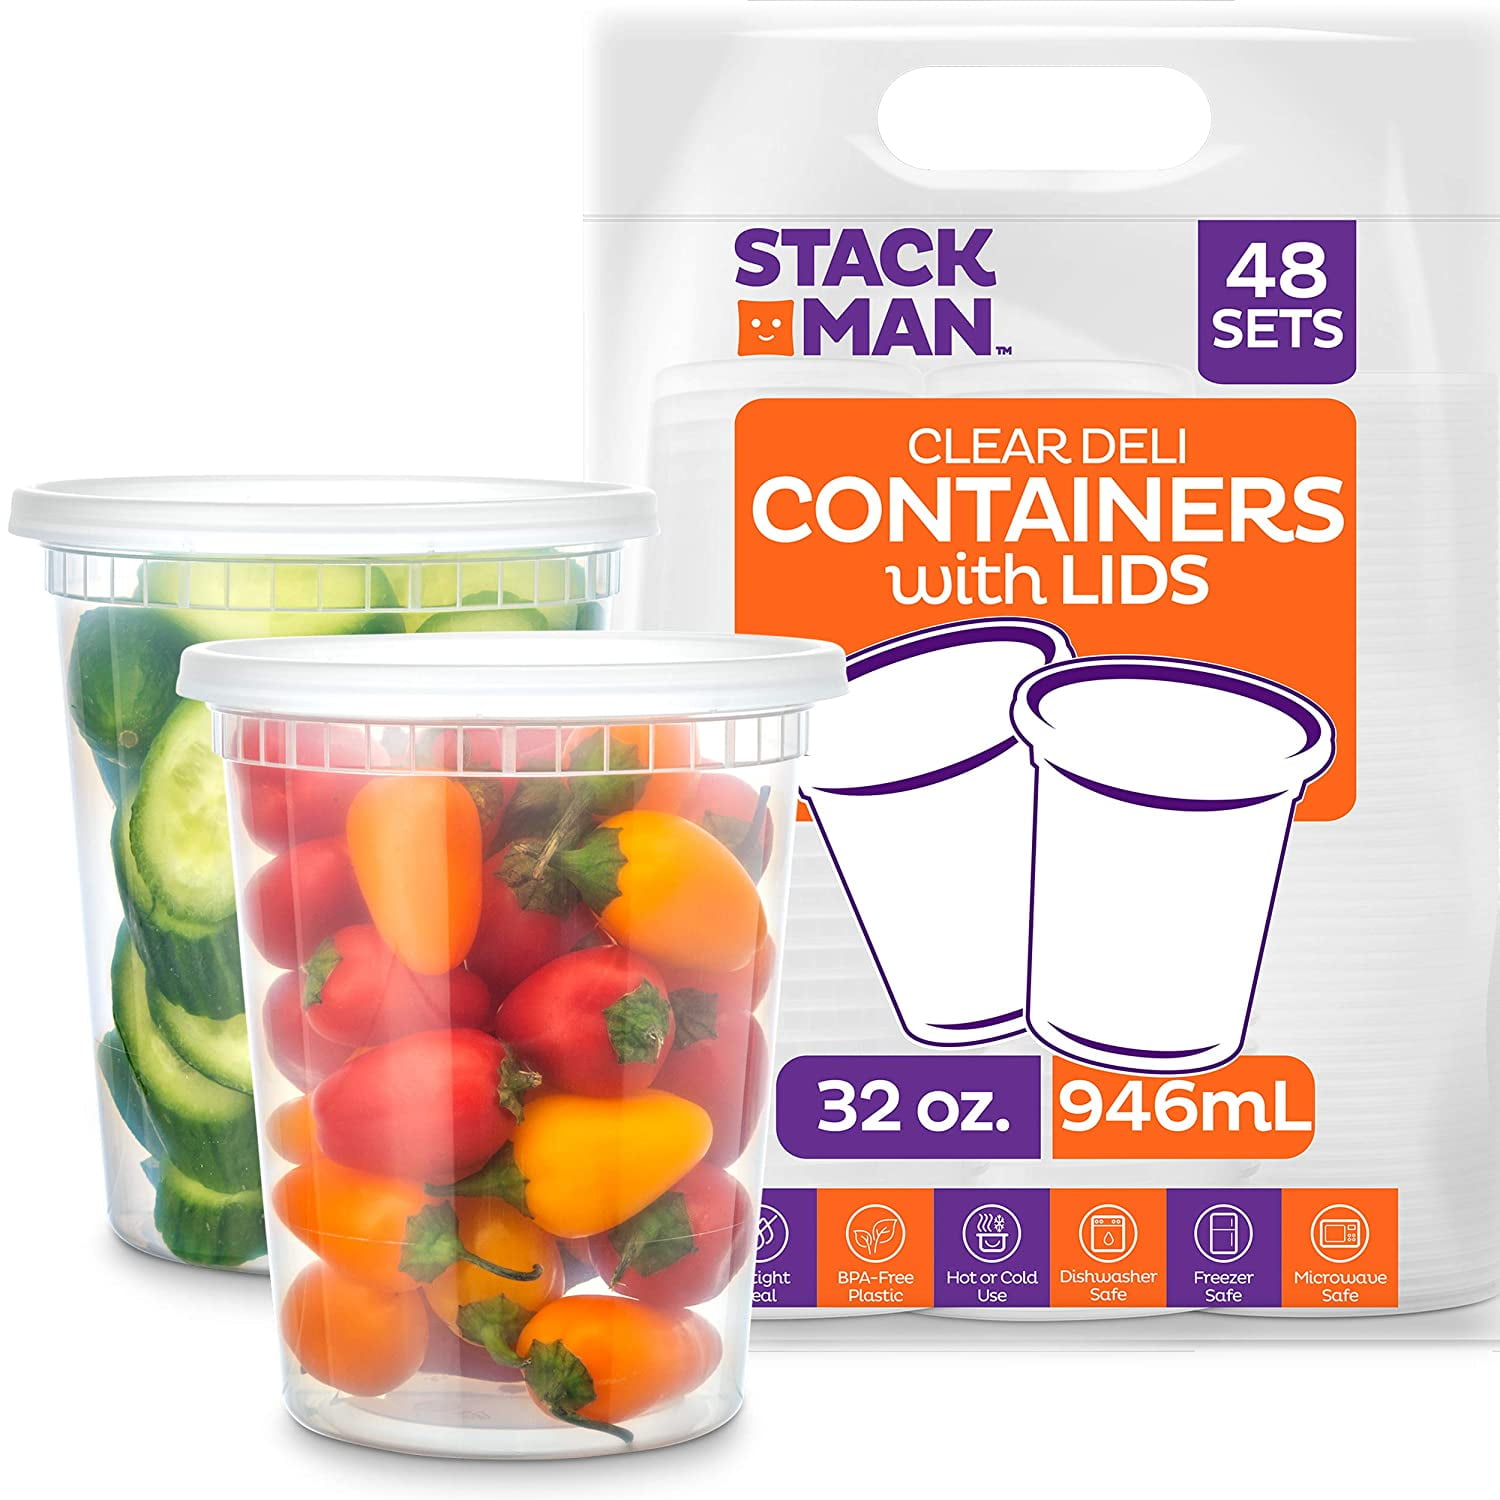 64 oz Plastic Soup Container - Pak-Man Packaging